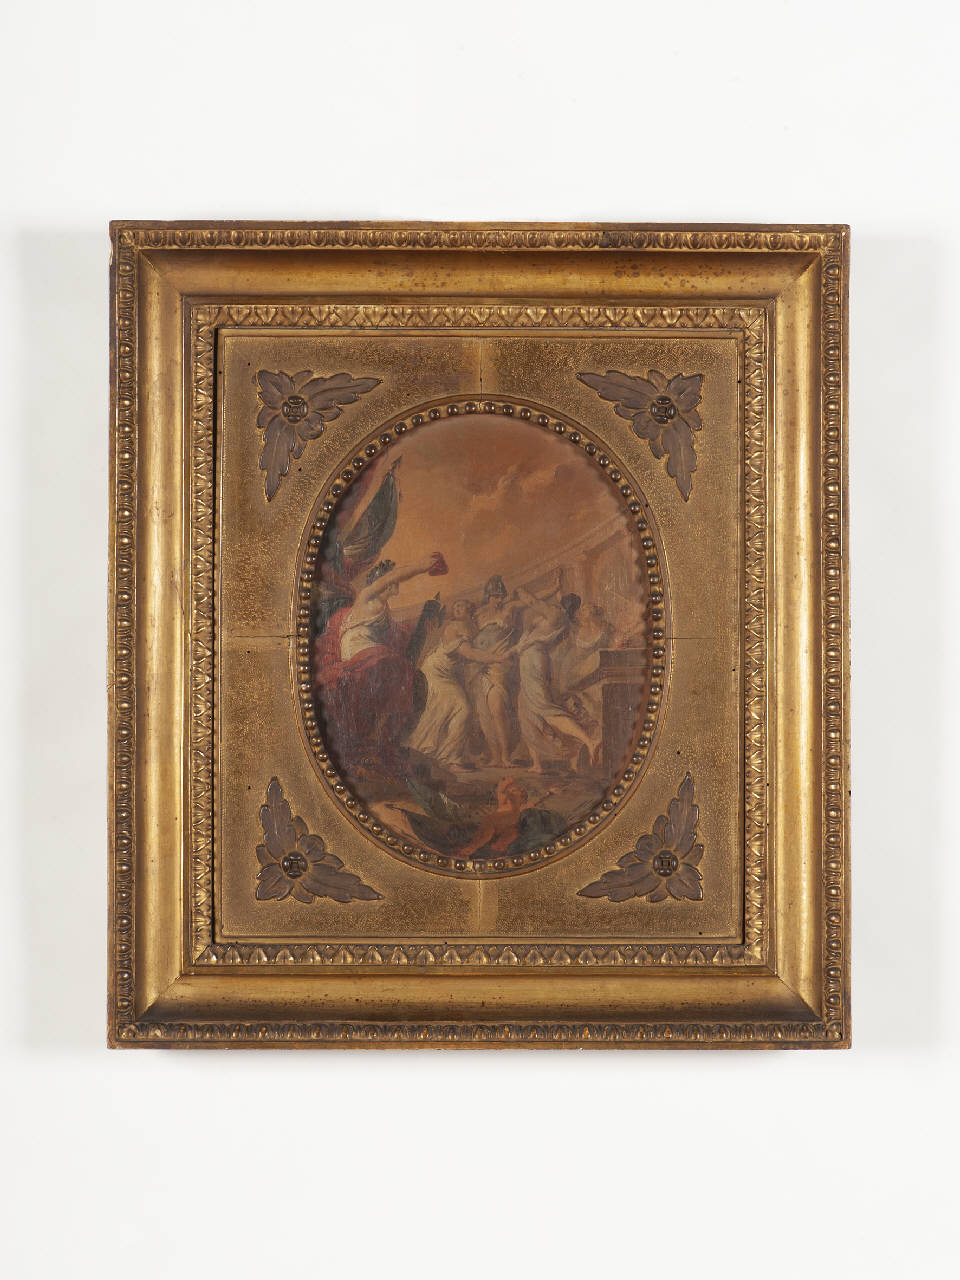 soggetto storico-allegorico (dipinto) di Gonin, Francesco (sec. XIX)